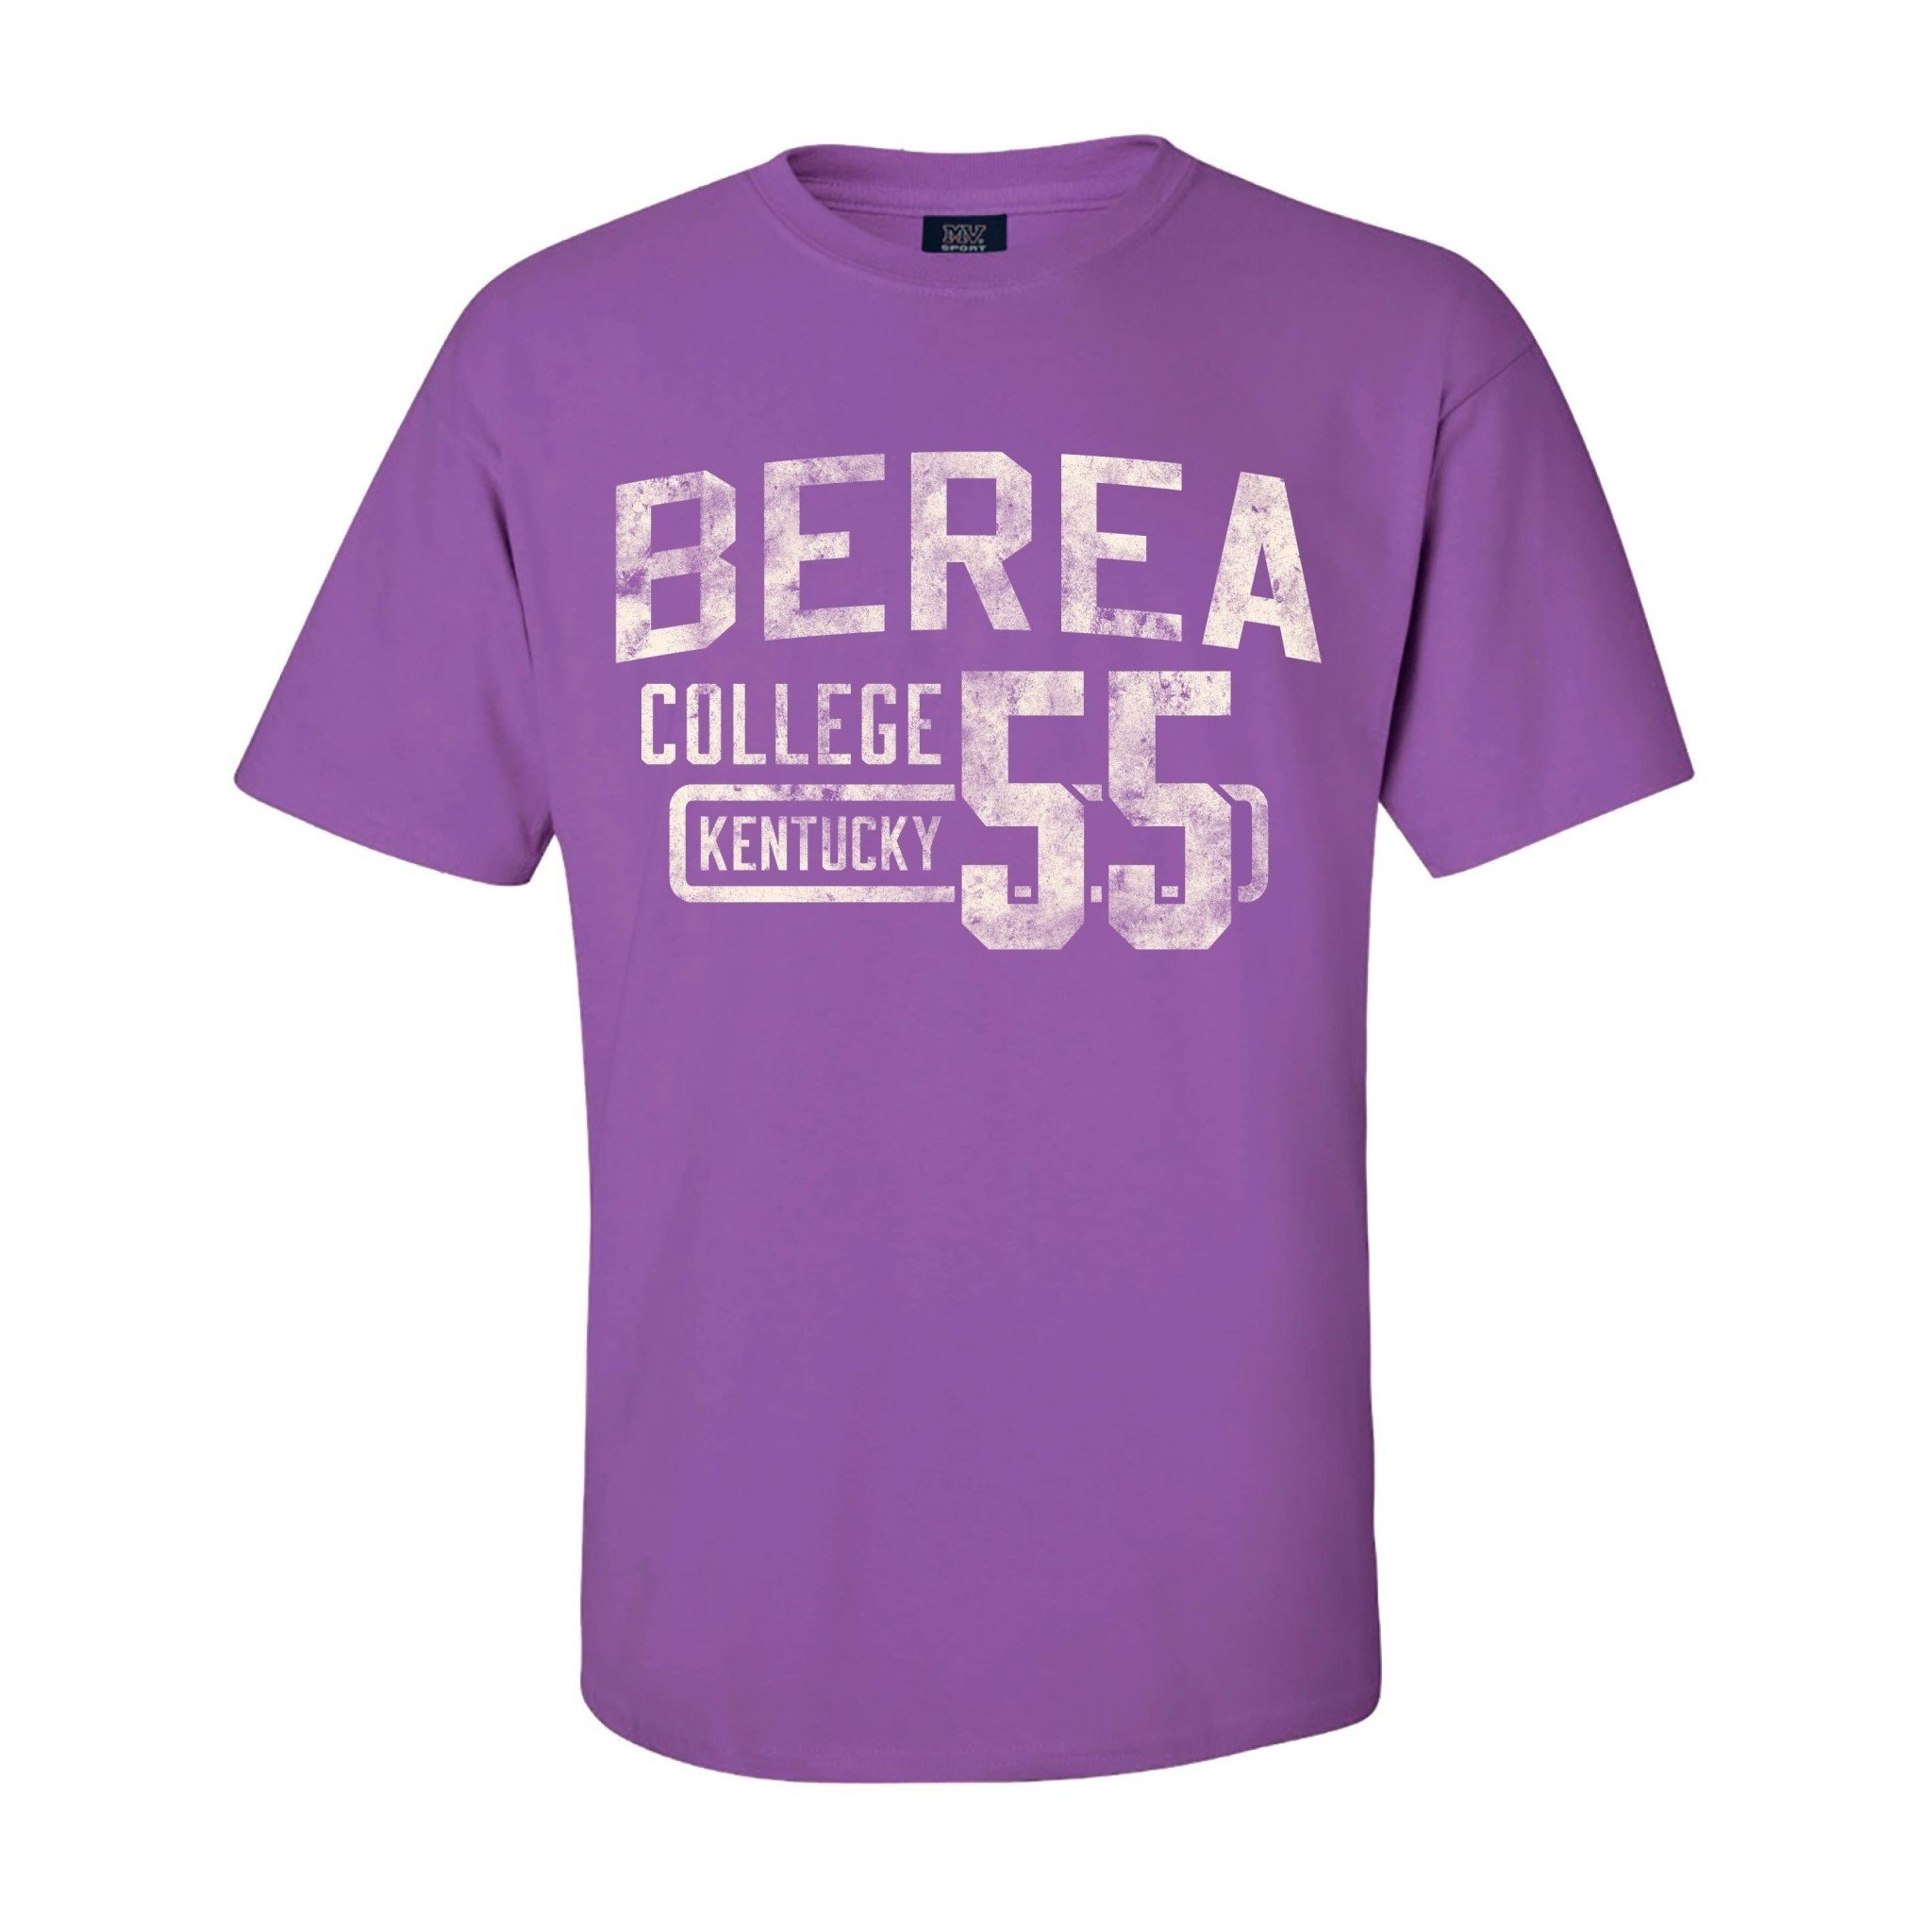 Berea College 55 T-Shirt-7